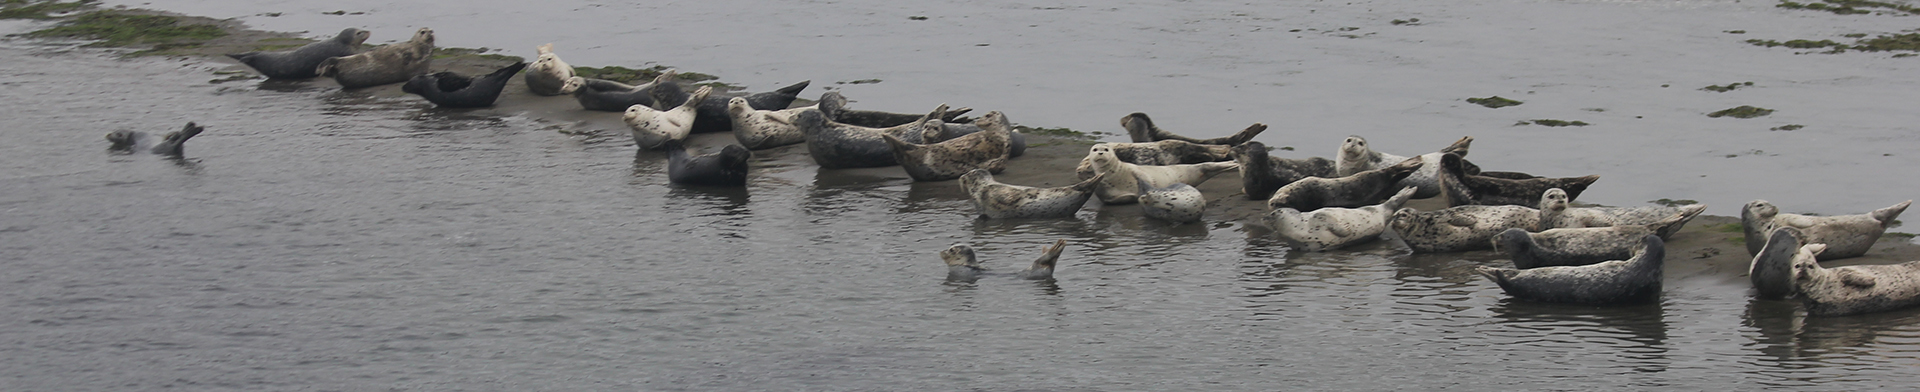 harbor seals hauled out on mudflat